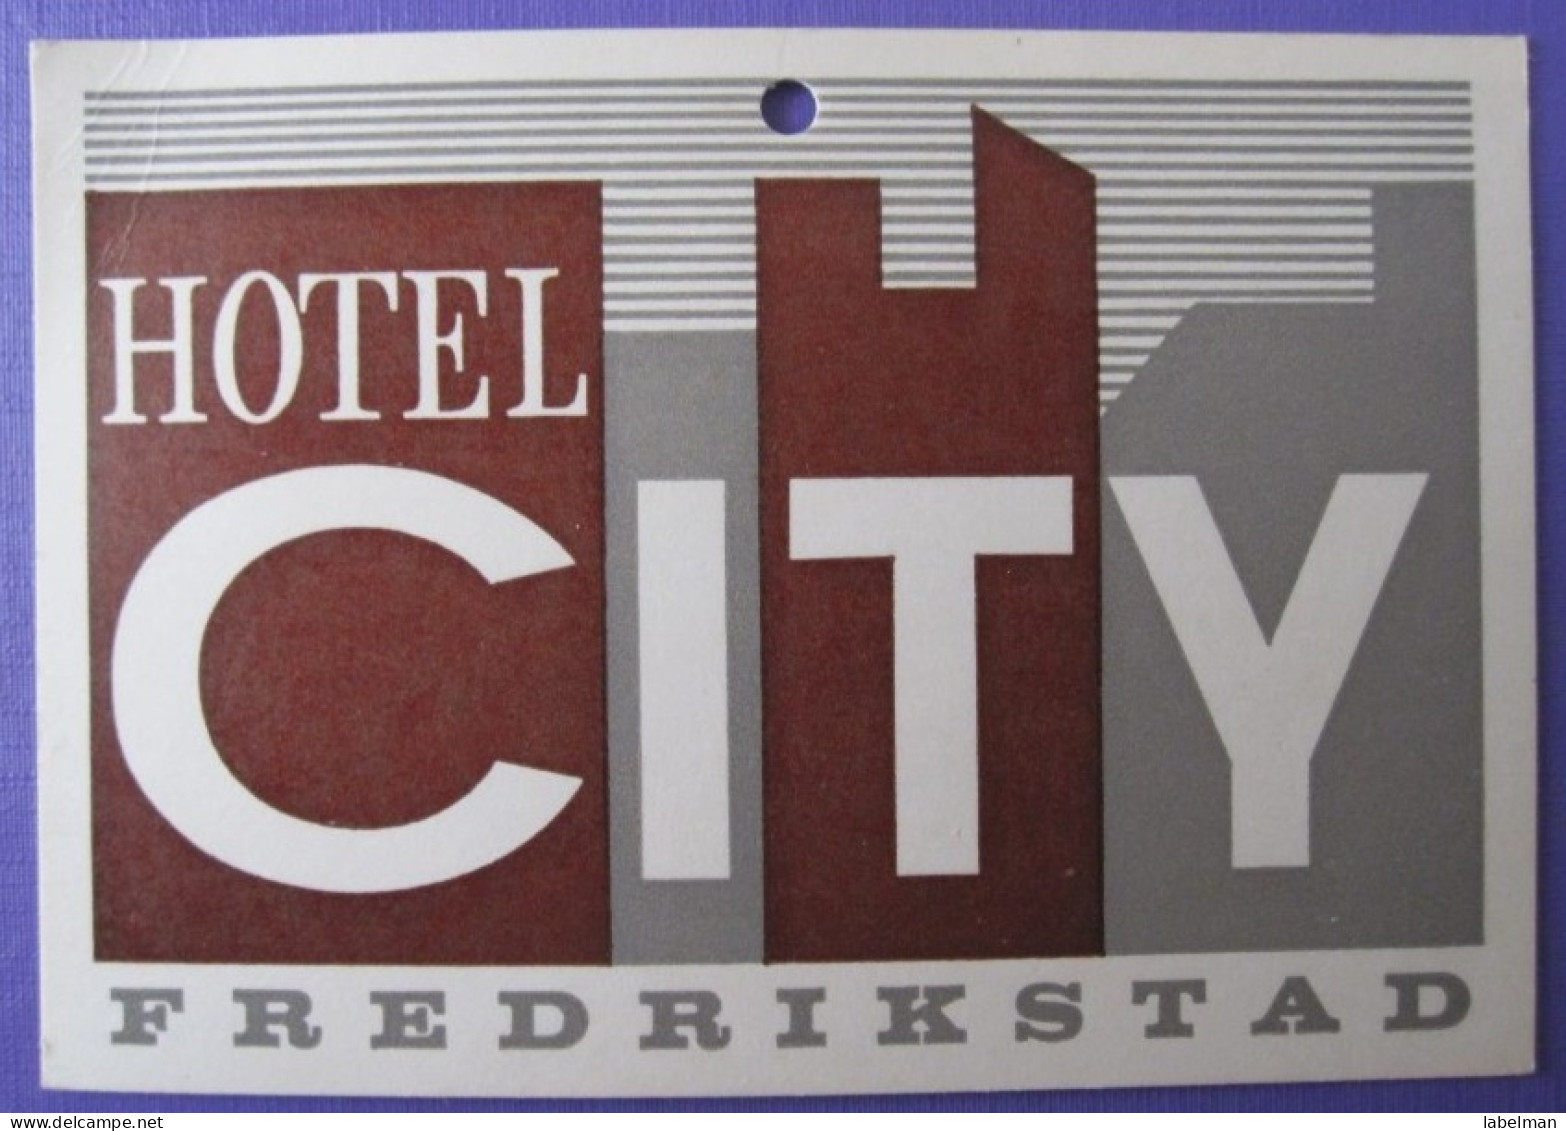 HOTEL HOTELLI HOTELL HOTELLET PENSION CITY FREDRIKSTAD NORVEGE NORWAY NORGE DECAL LUGGAGE LABEL ETIQUETTE AUFKLEBER - Adesivi Di Alberghi